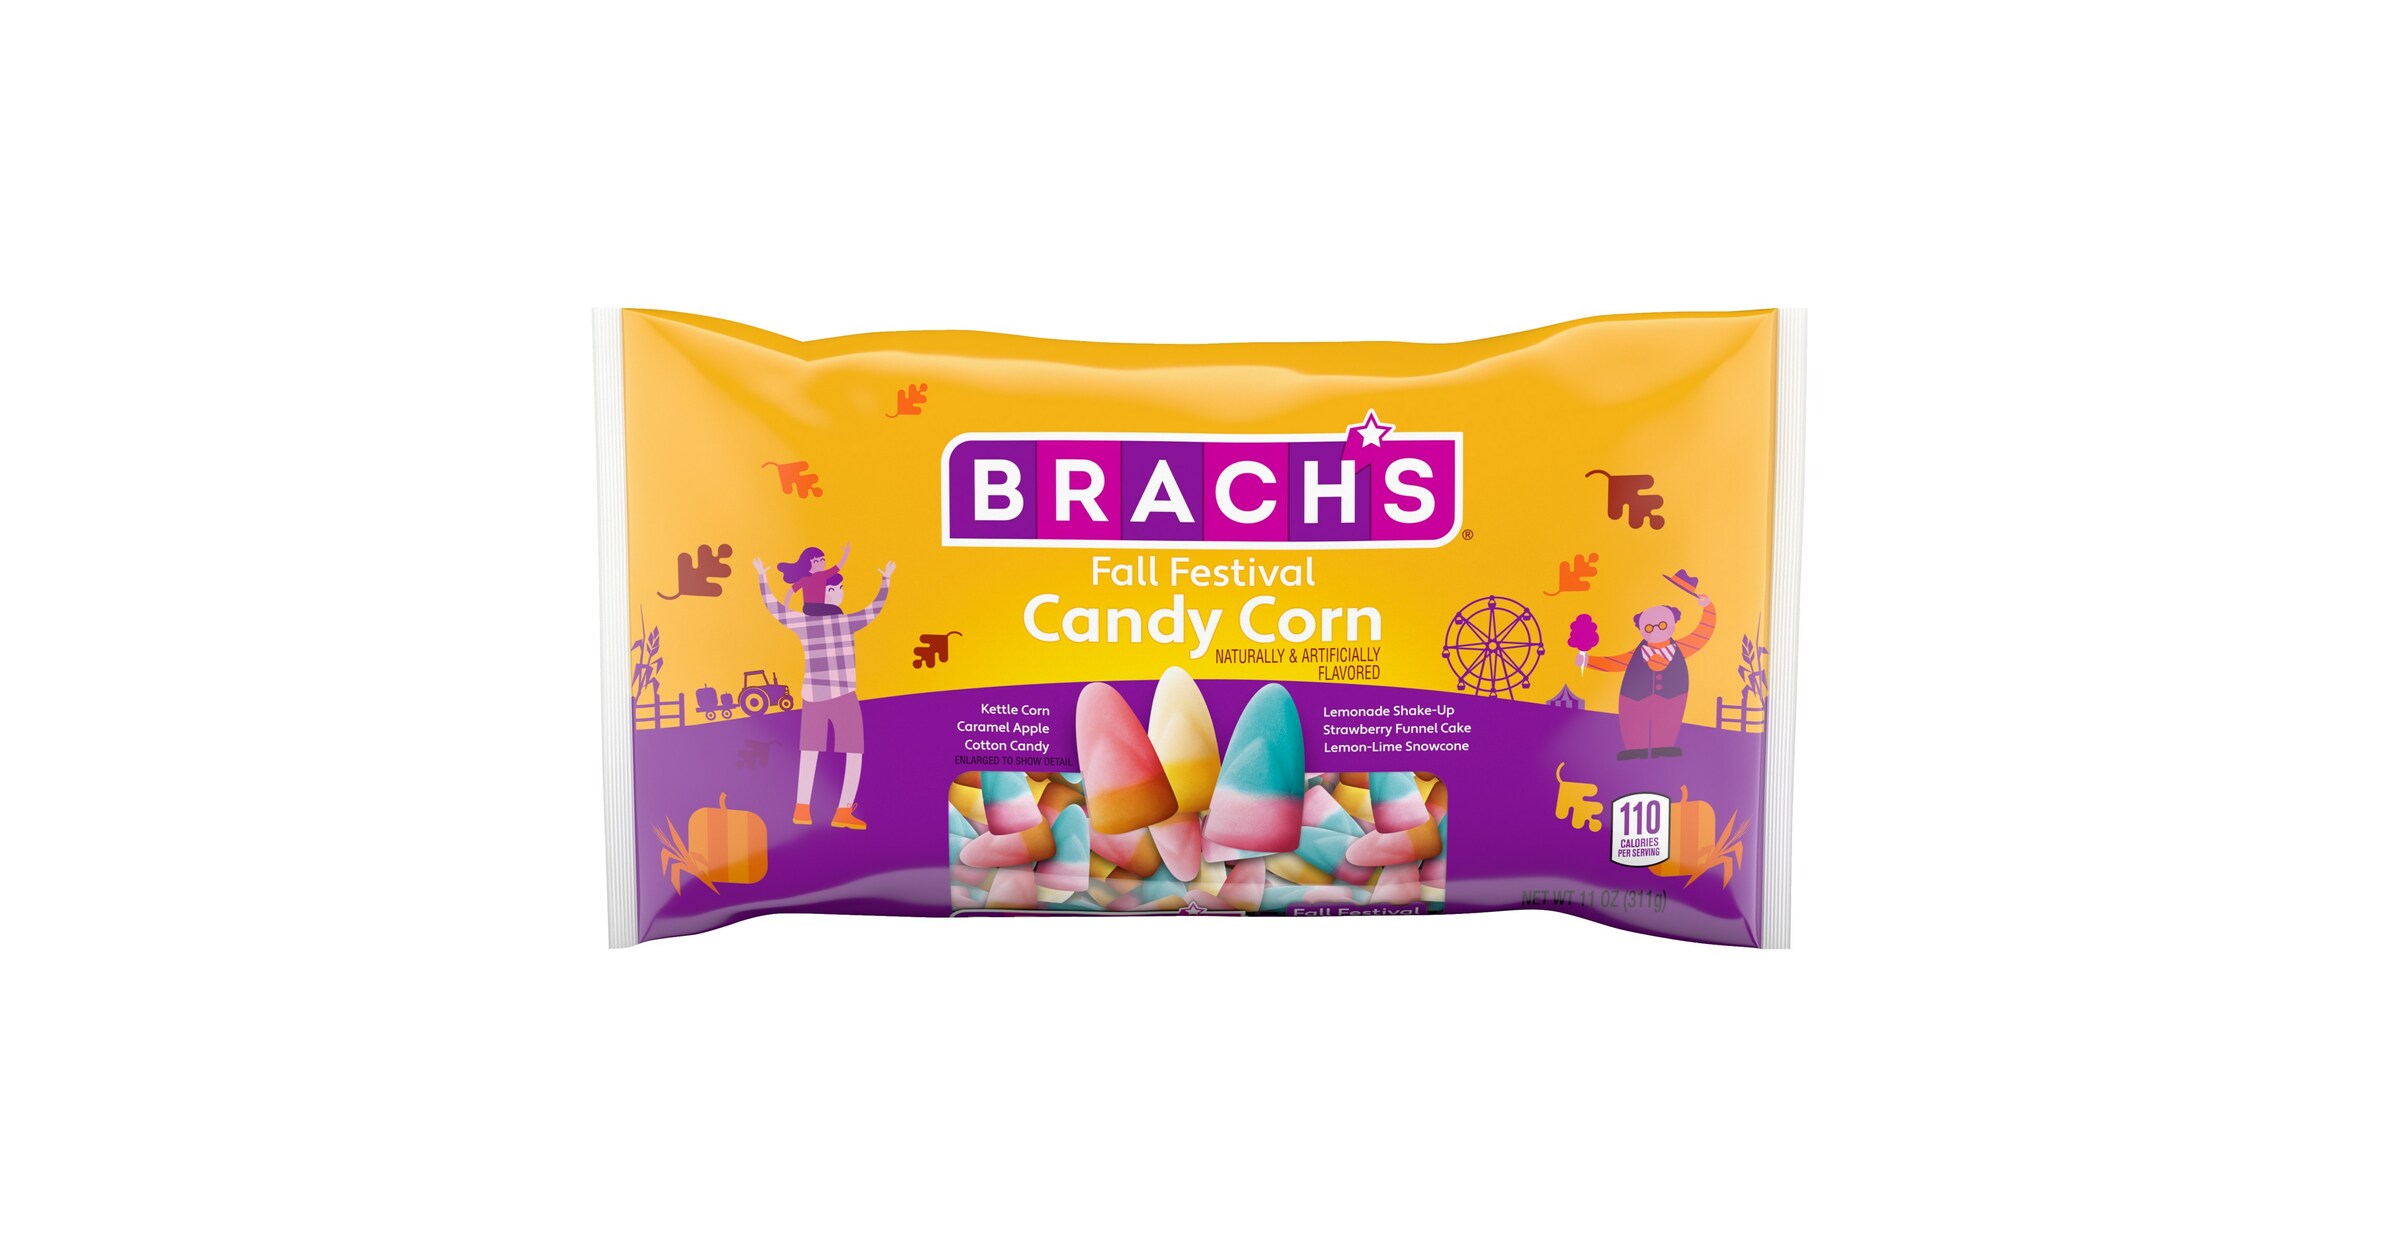 Brach's Candy Corn Club Sweepstakes (100 Winners + 5,000 Rebate Offers)